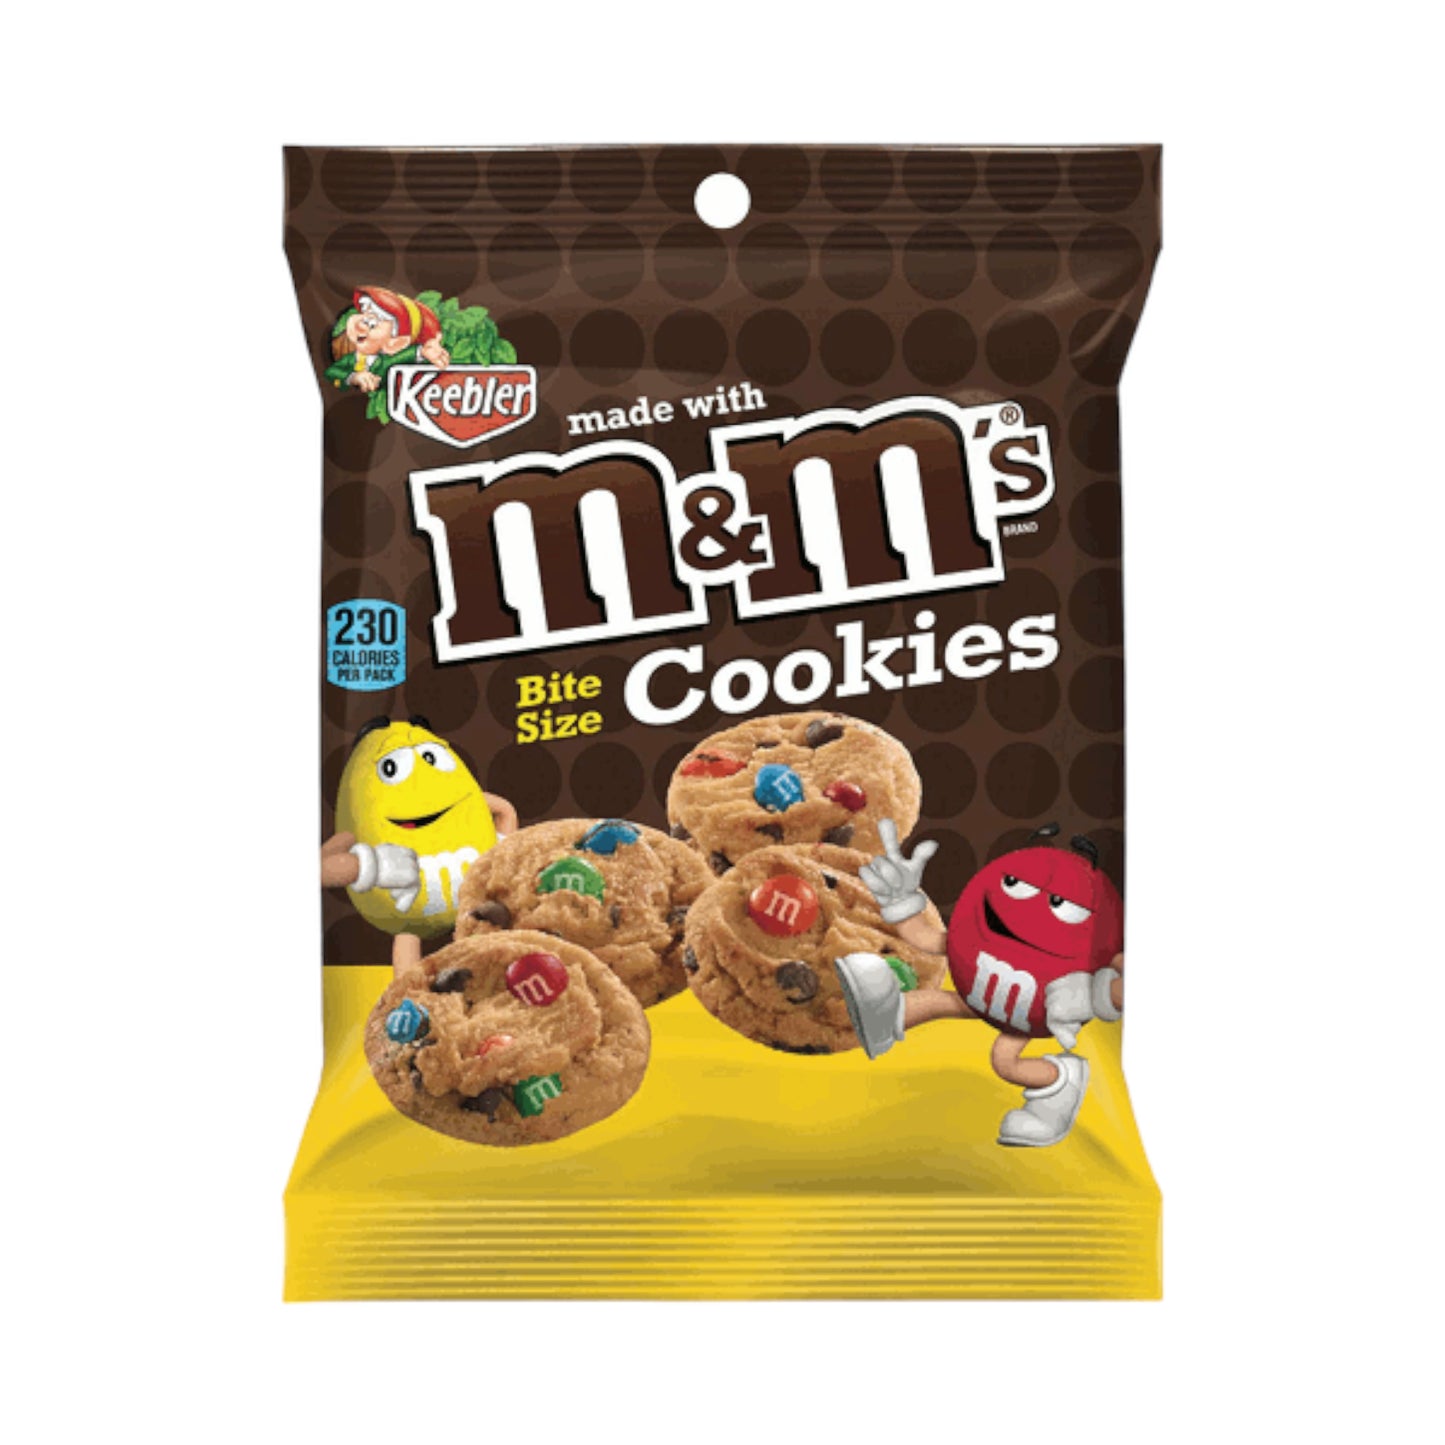 Keebler Bite Size Cookies with mini M&M's - 1.6oz (45g)